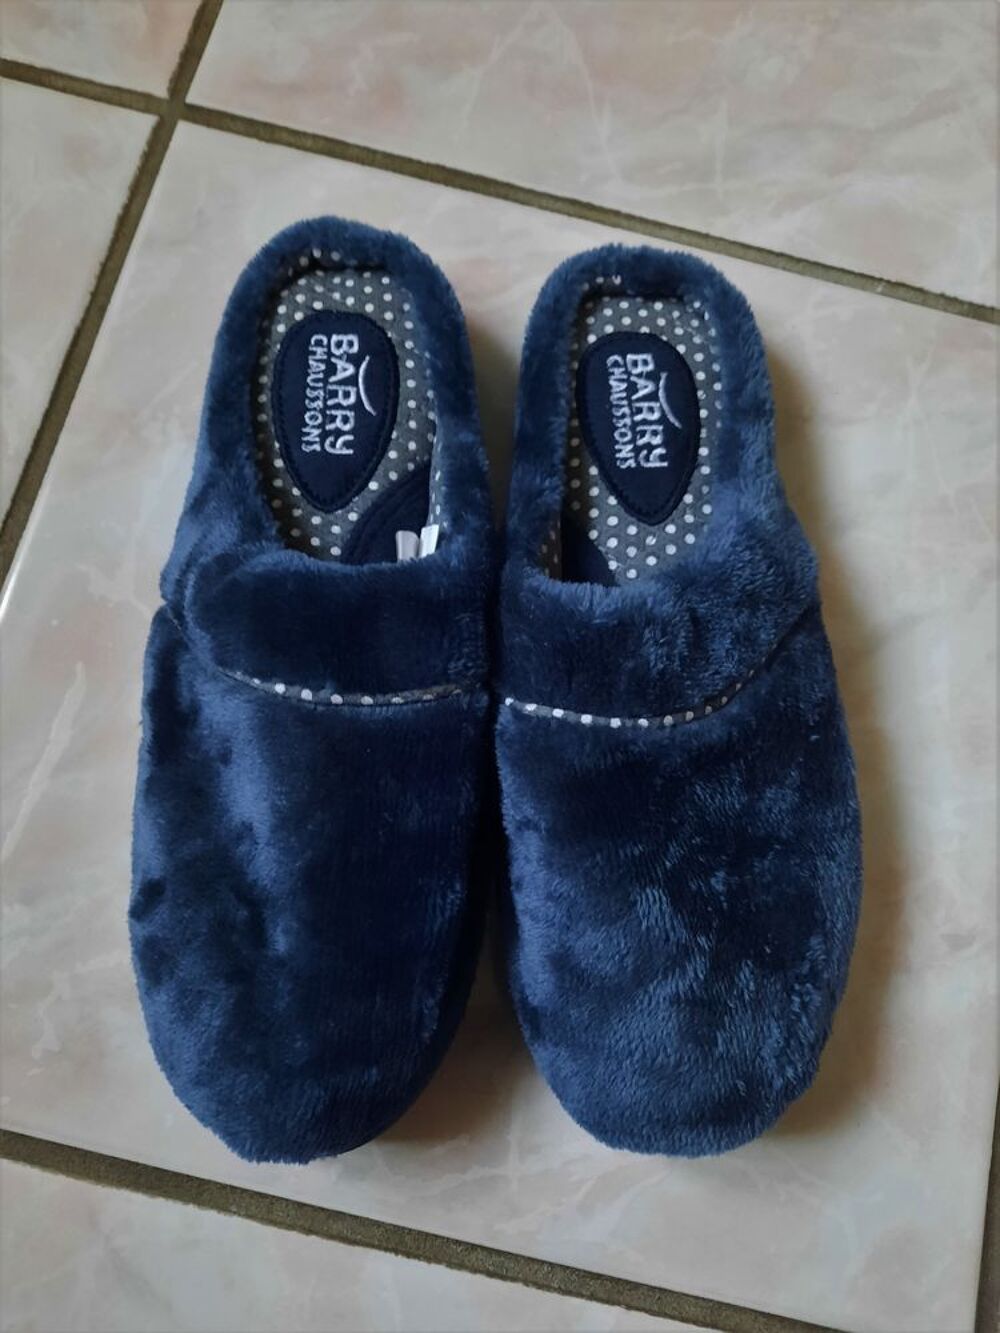 pantoufles chaussons mules bleu marine Barry neuf - P 36 Chaussures